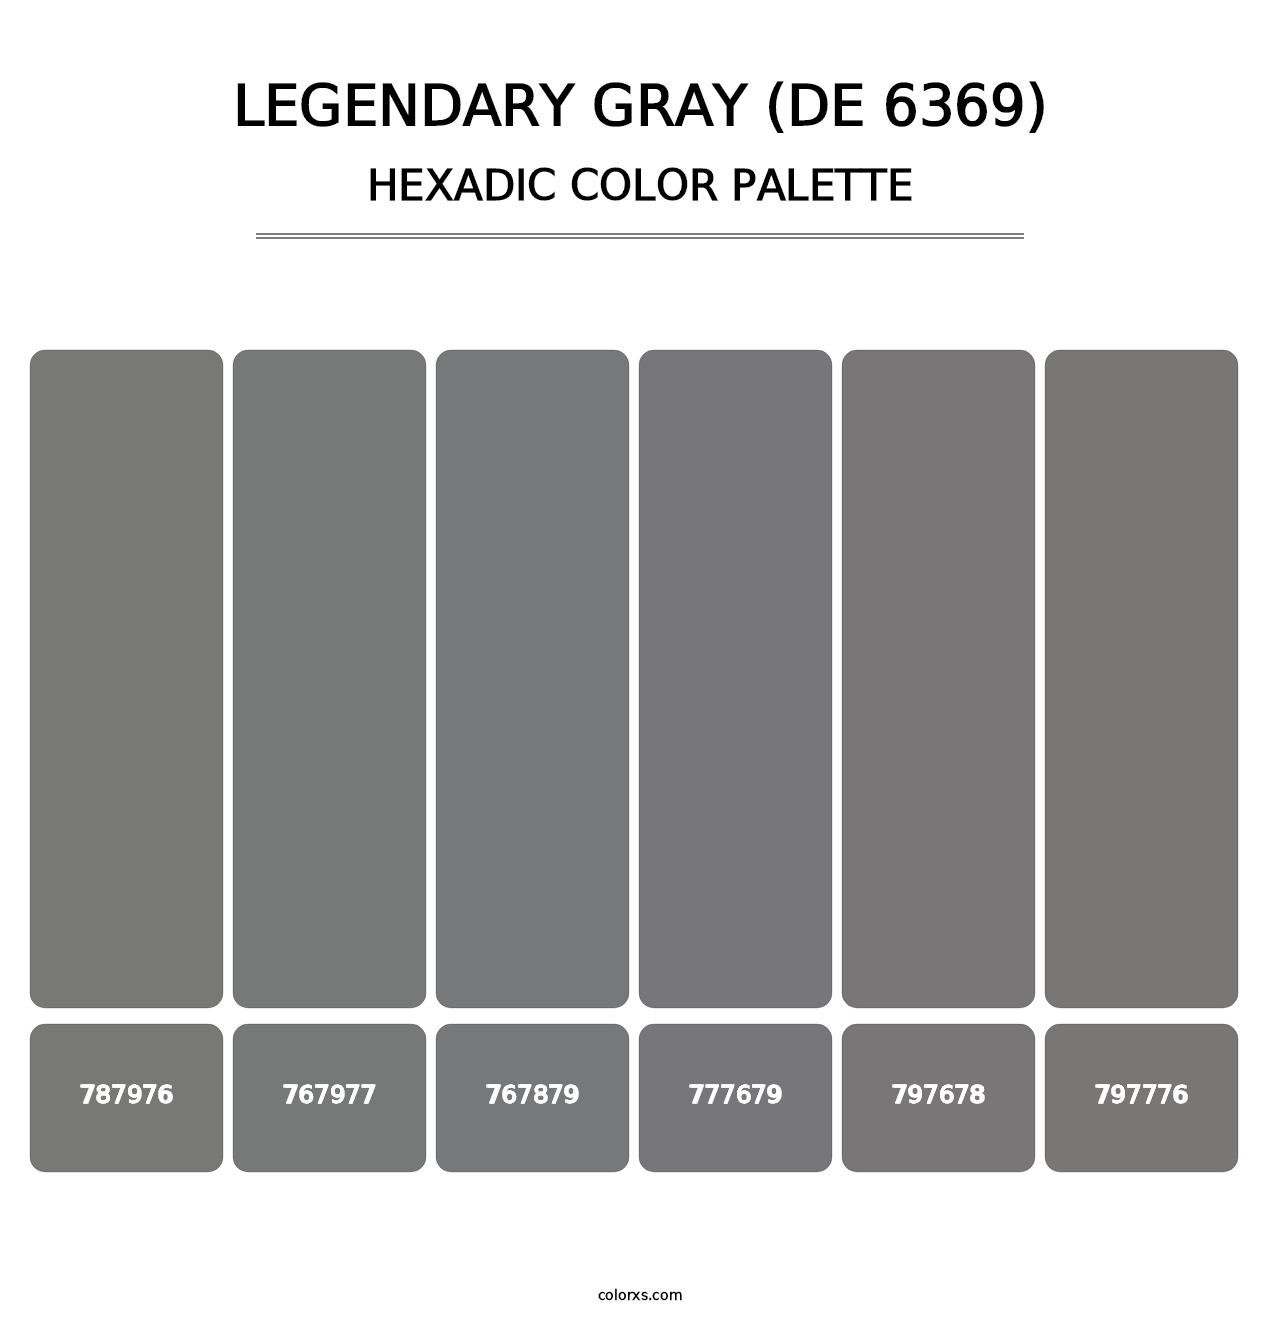 Legendary Gray (DE 6369) - Hexadic Color Palette